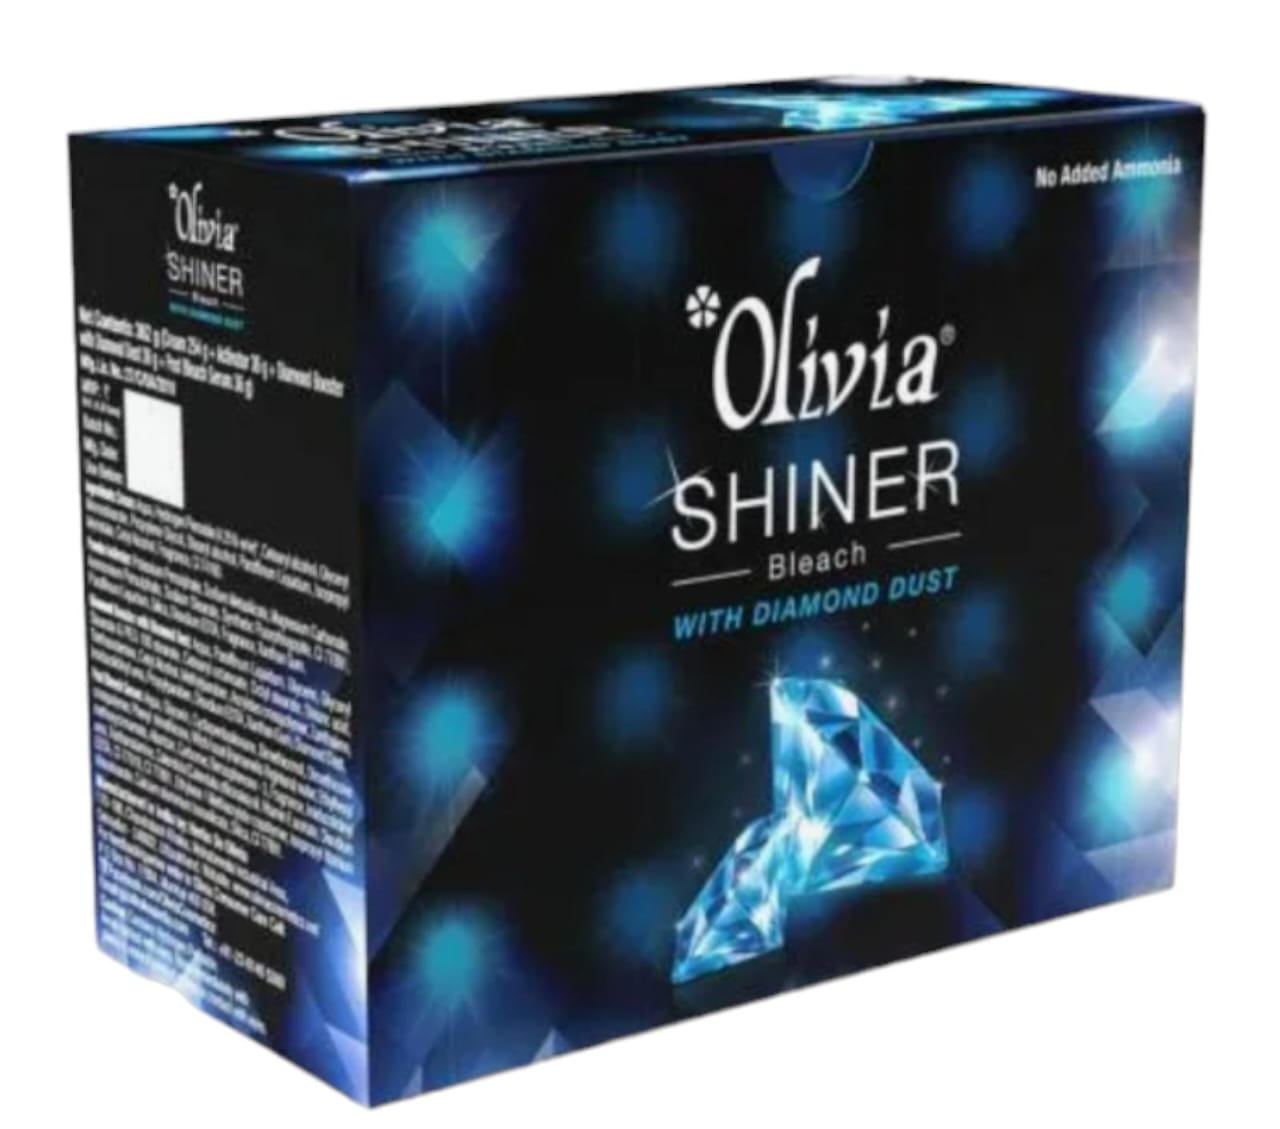 Olivia Shiner Bleach